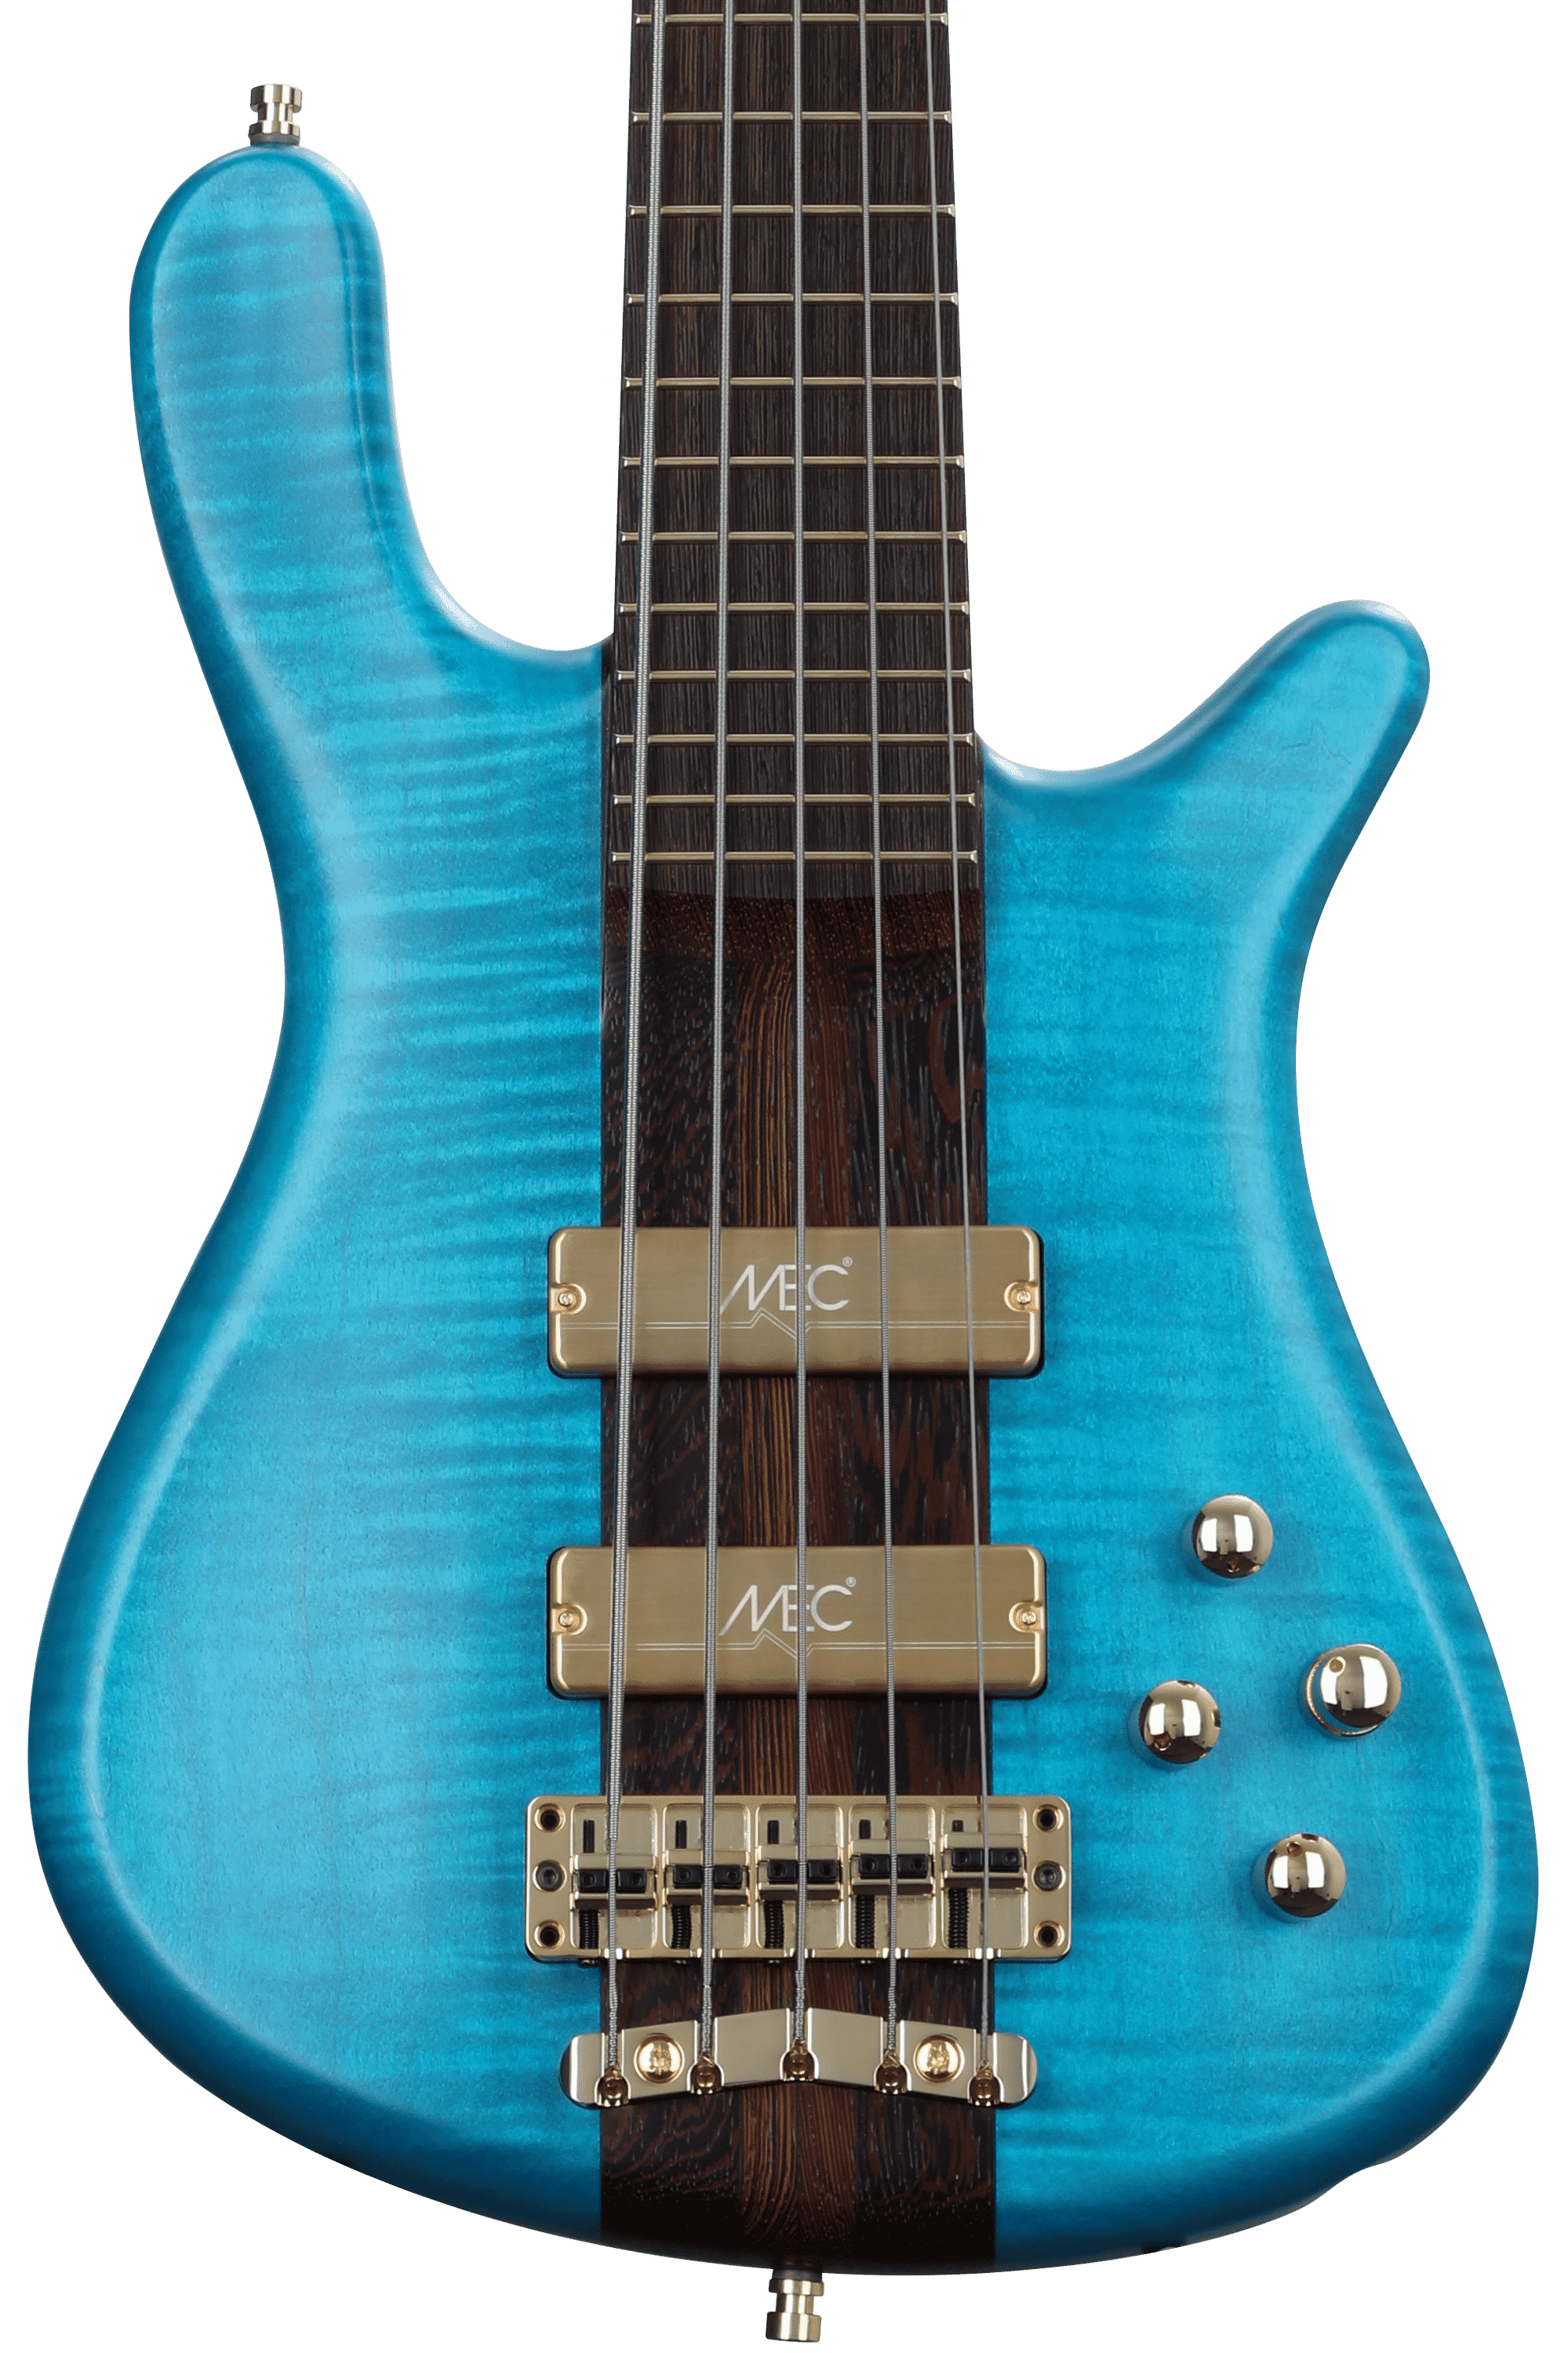 Warwick Masterbuilt Streamer Stage I 5-string Broadneck Electric Bass  Guitar - Turquoise Blue Transparent Satin